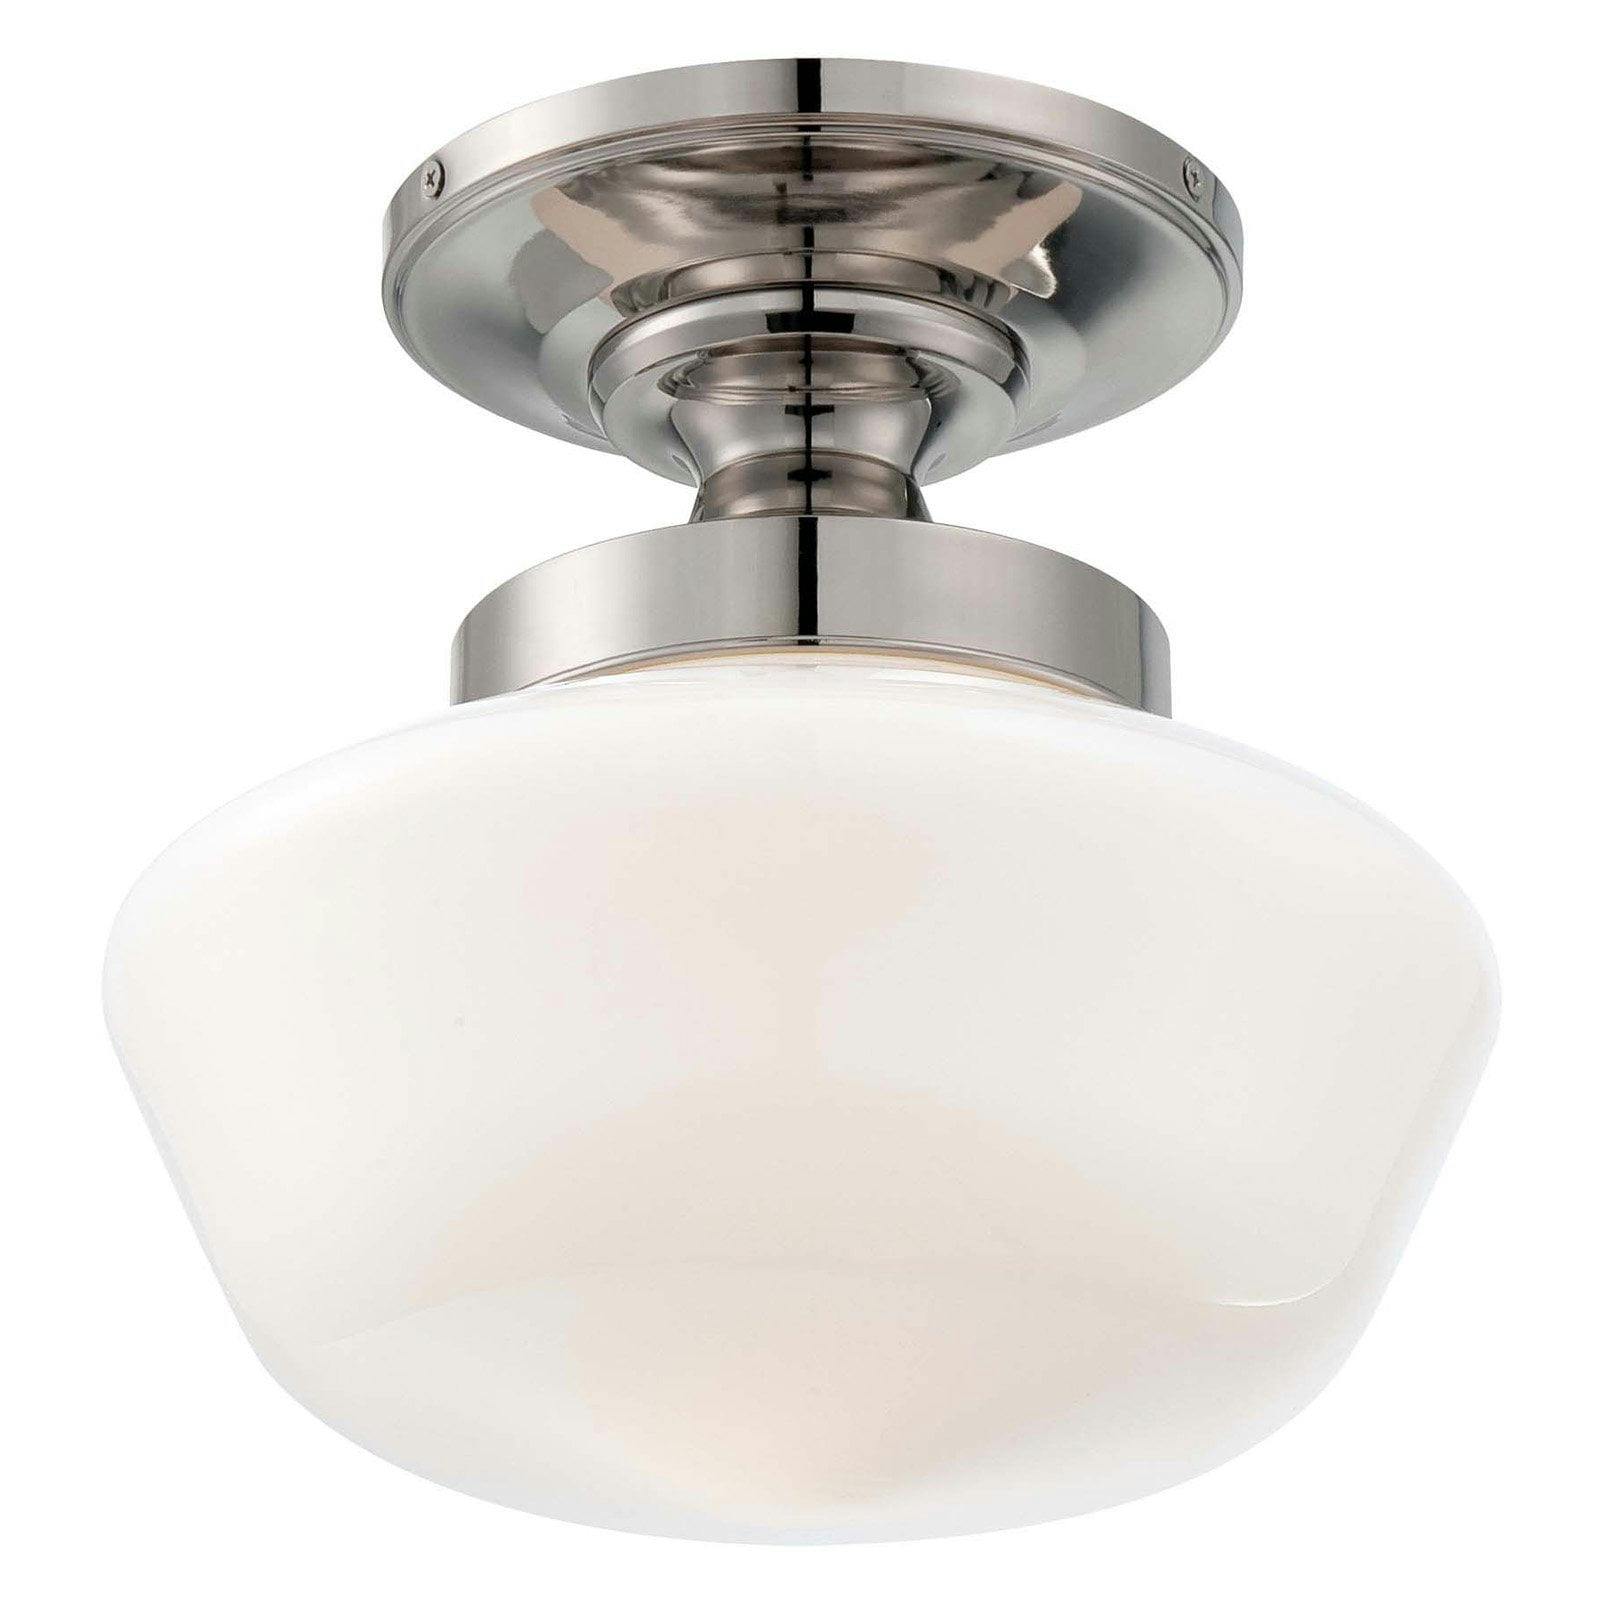 Elegant Opal Glass Bowl Ceiling Light in Polished Nickel